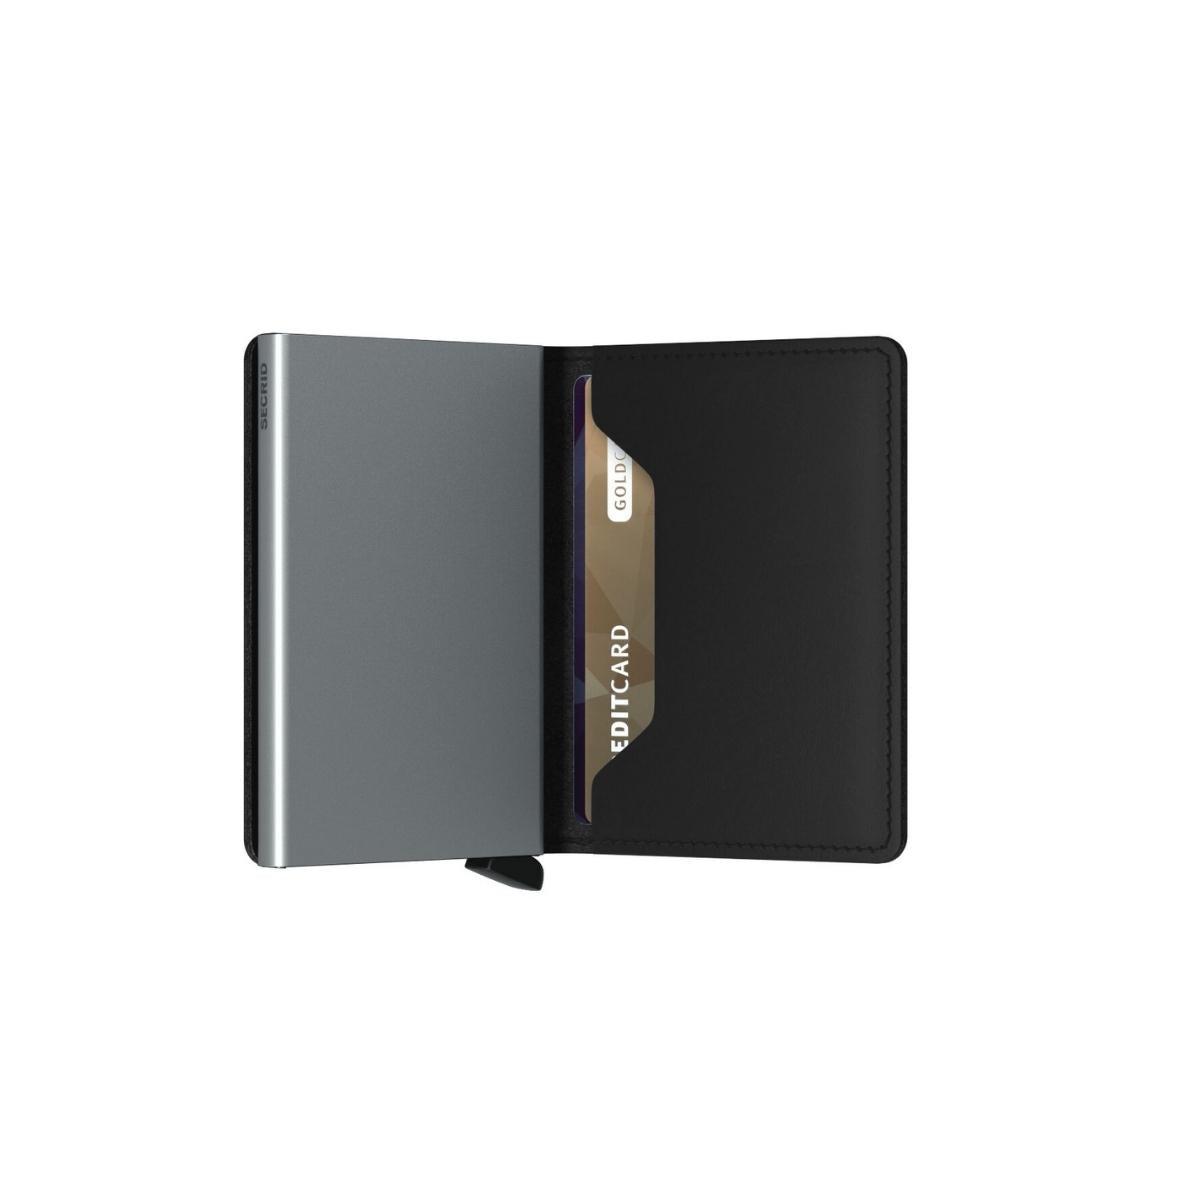 Secrid Slim Wallet Original in Black